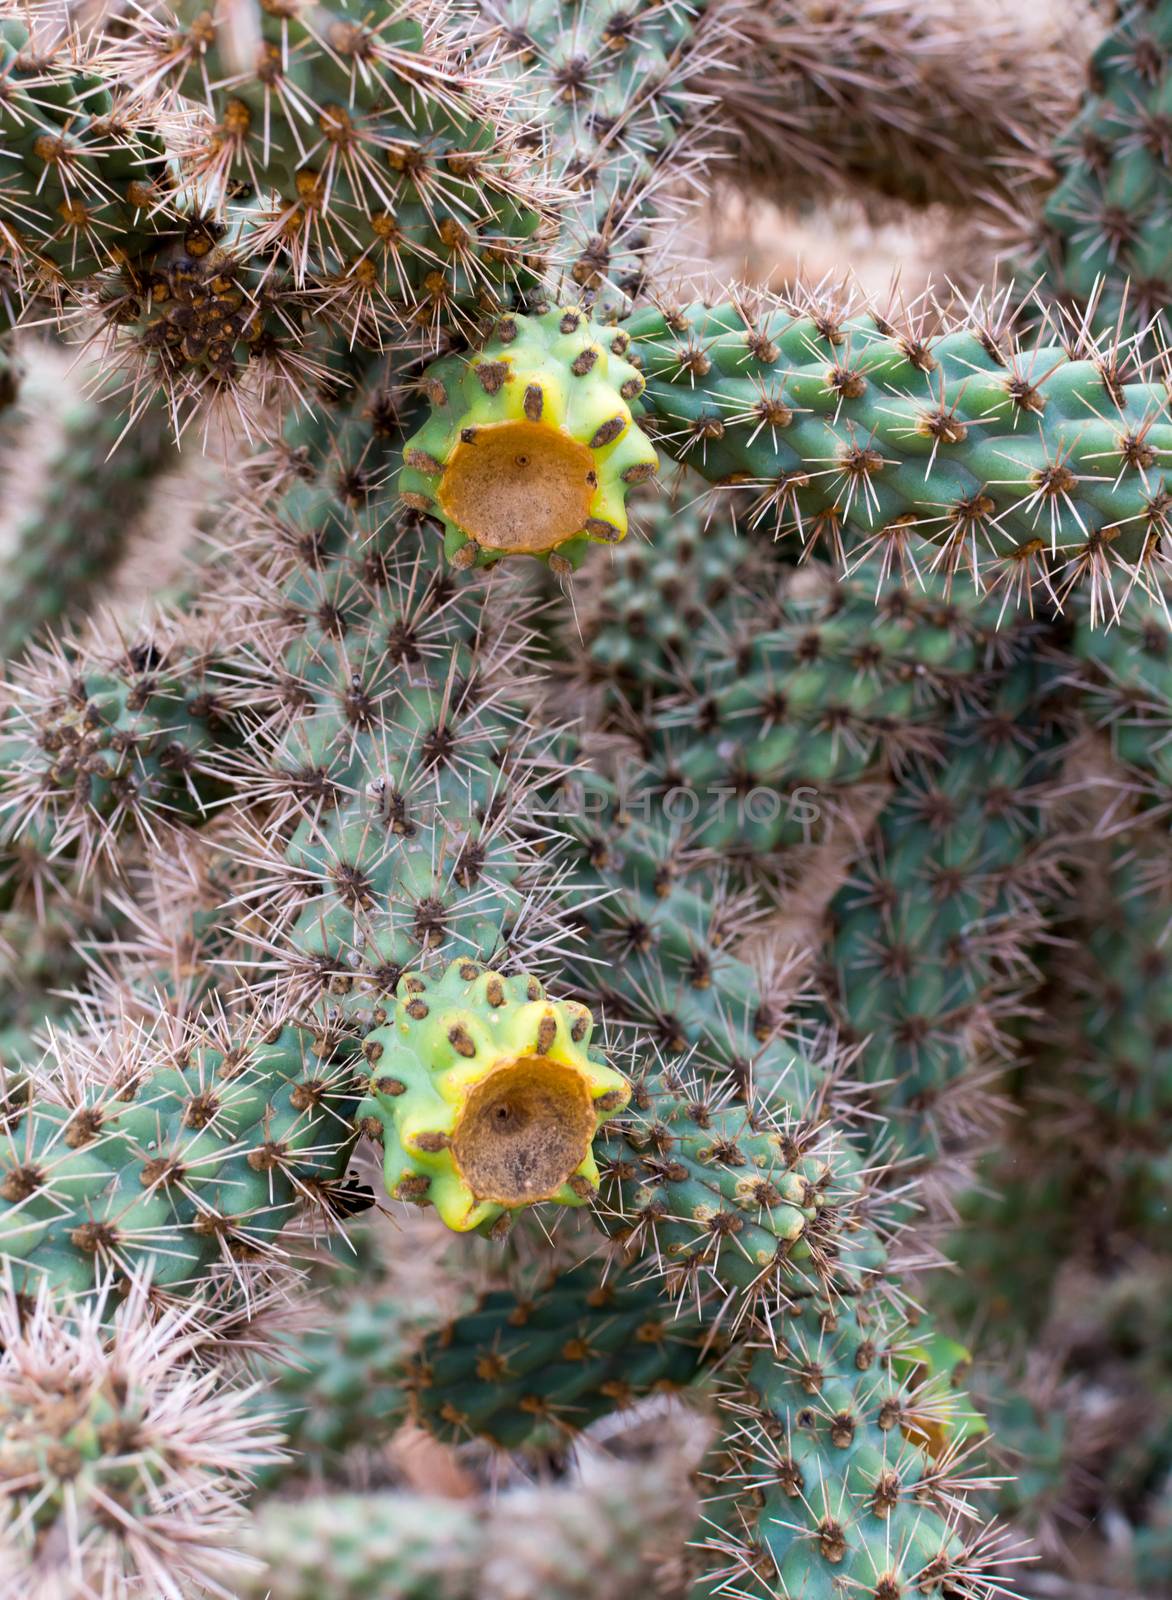 Yellow cactus fruits by ArtesiaWells